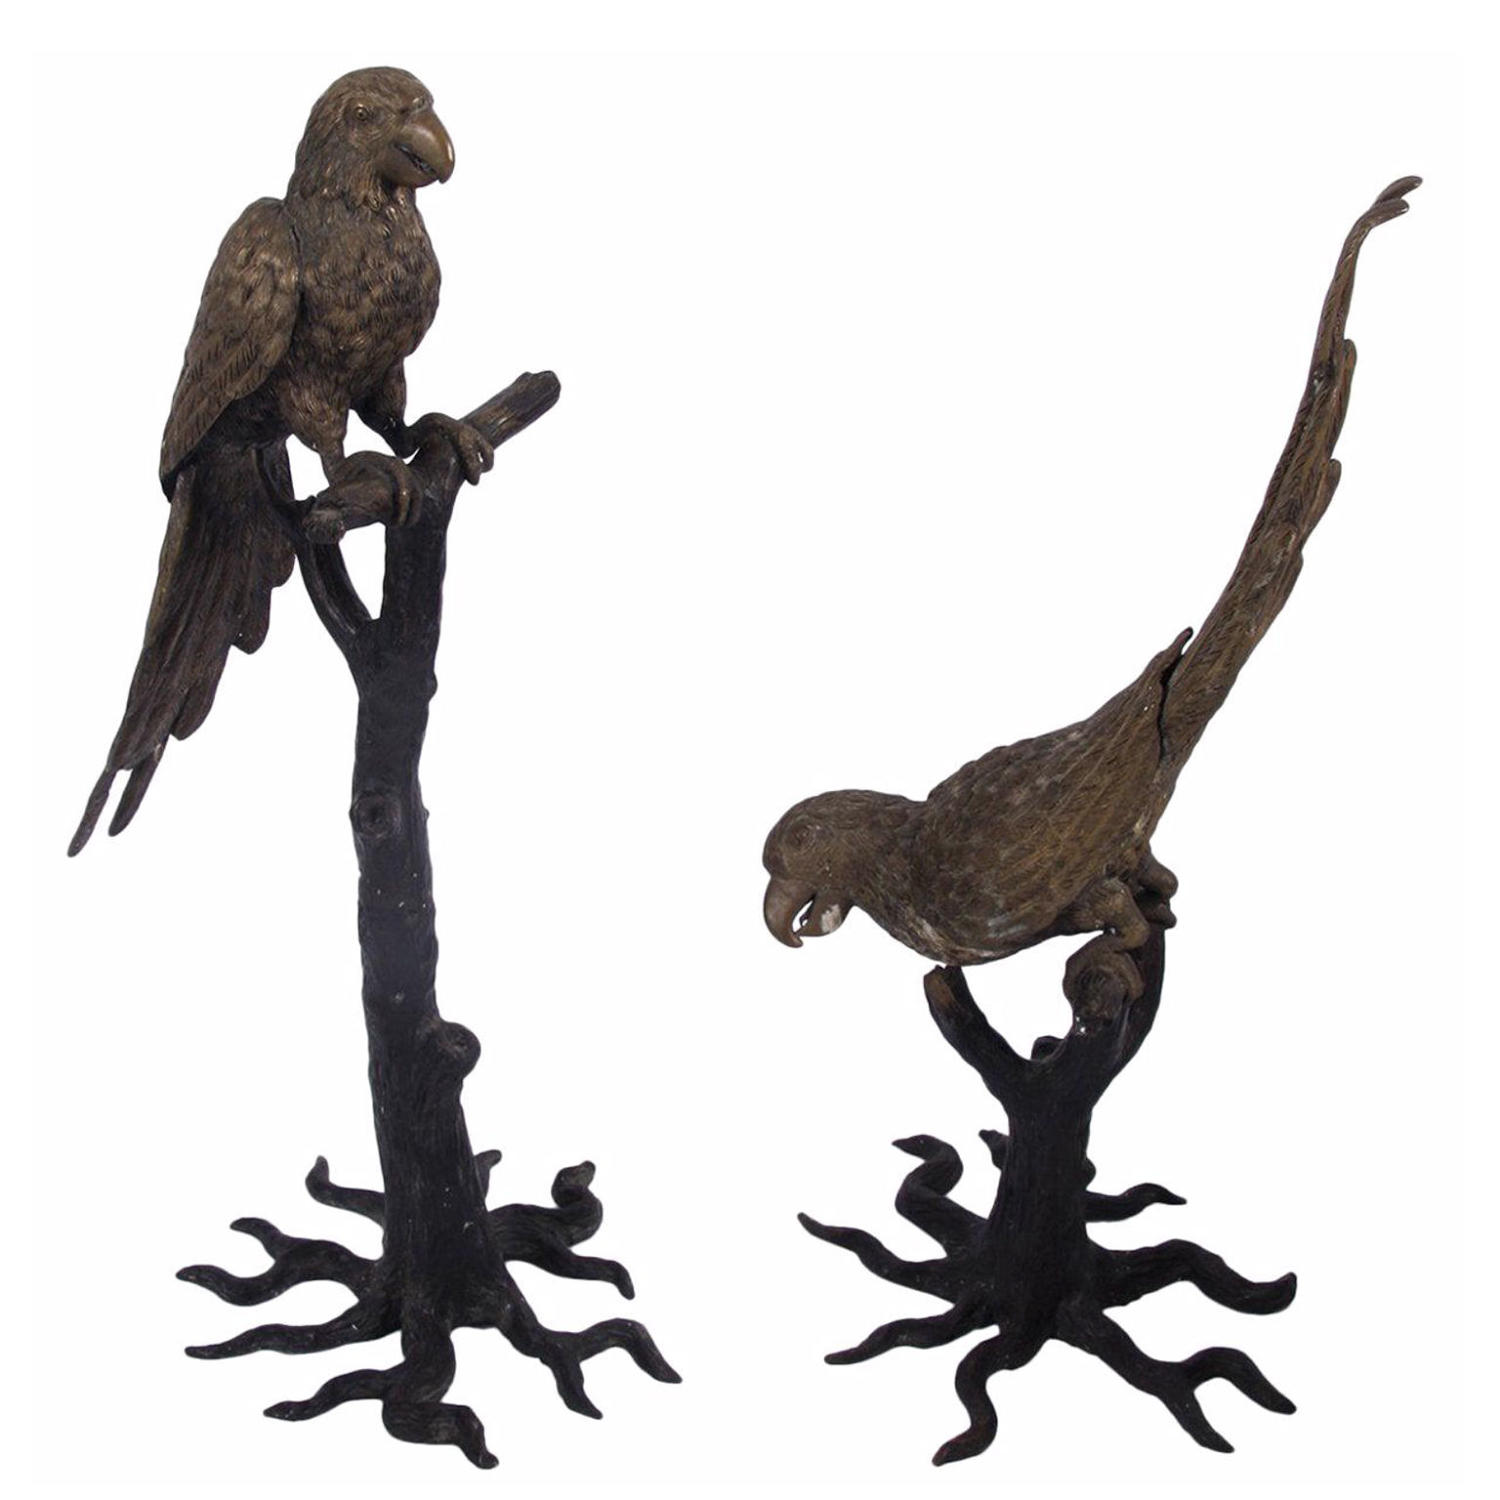 Pair of Parrot Sculptures